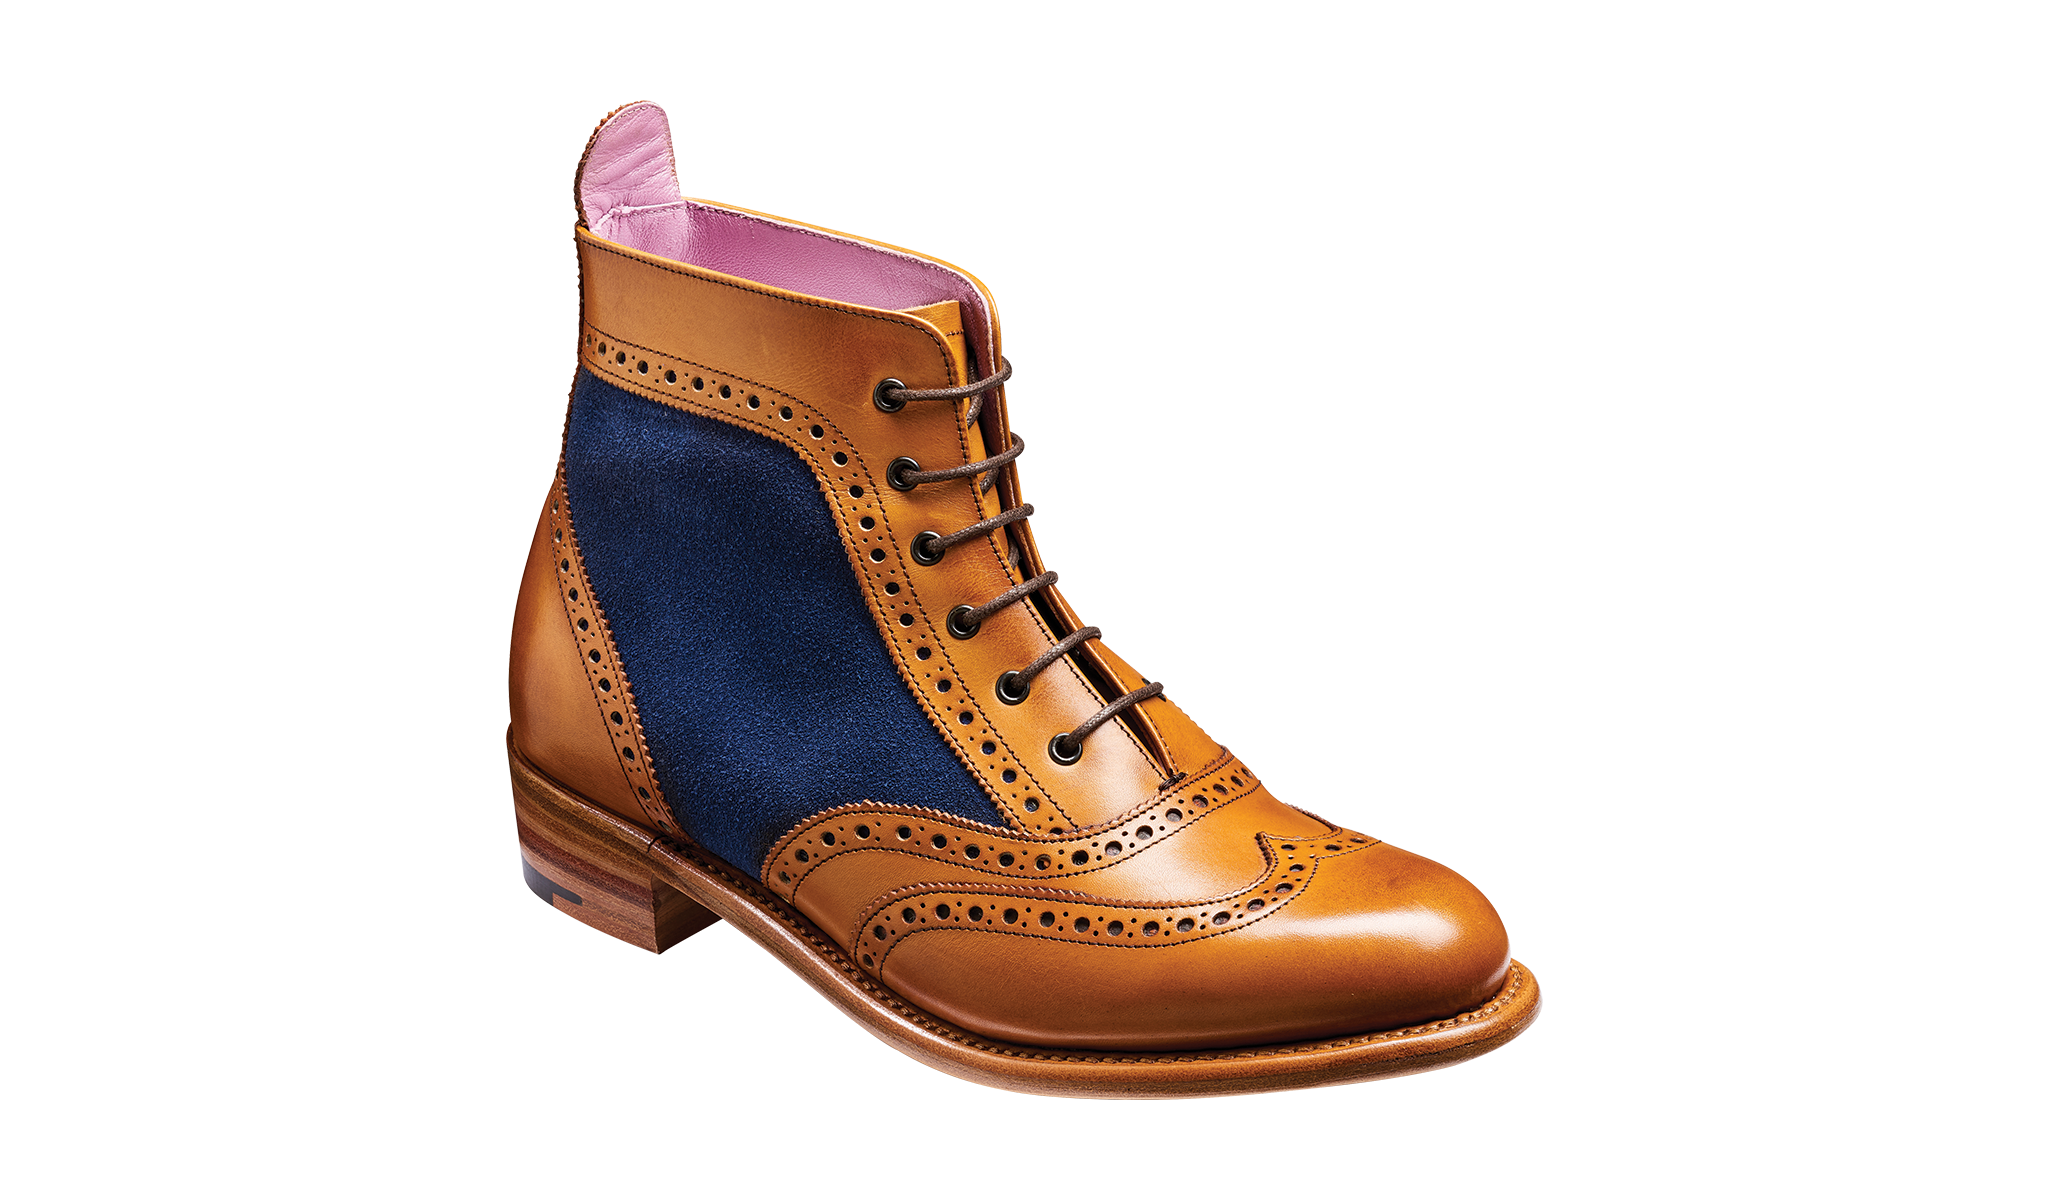 Grace - A women's brogue boot by Barker Shoes.